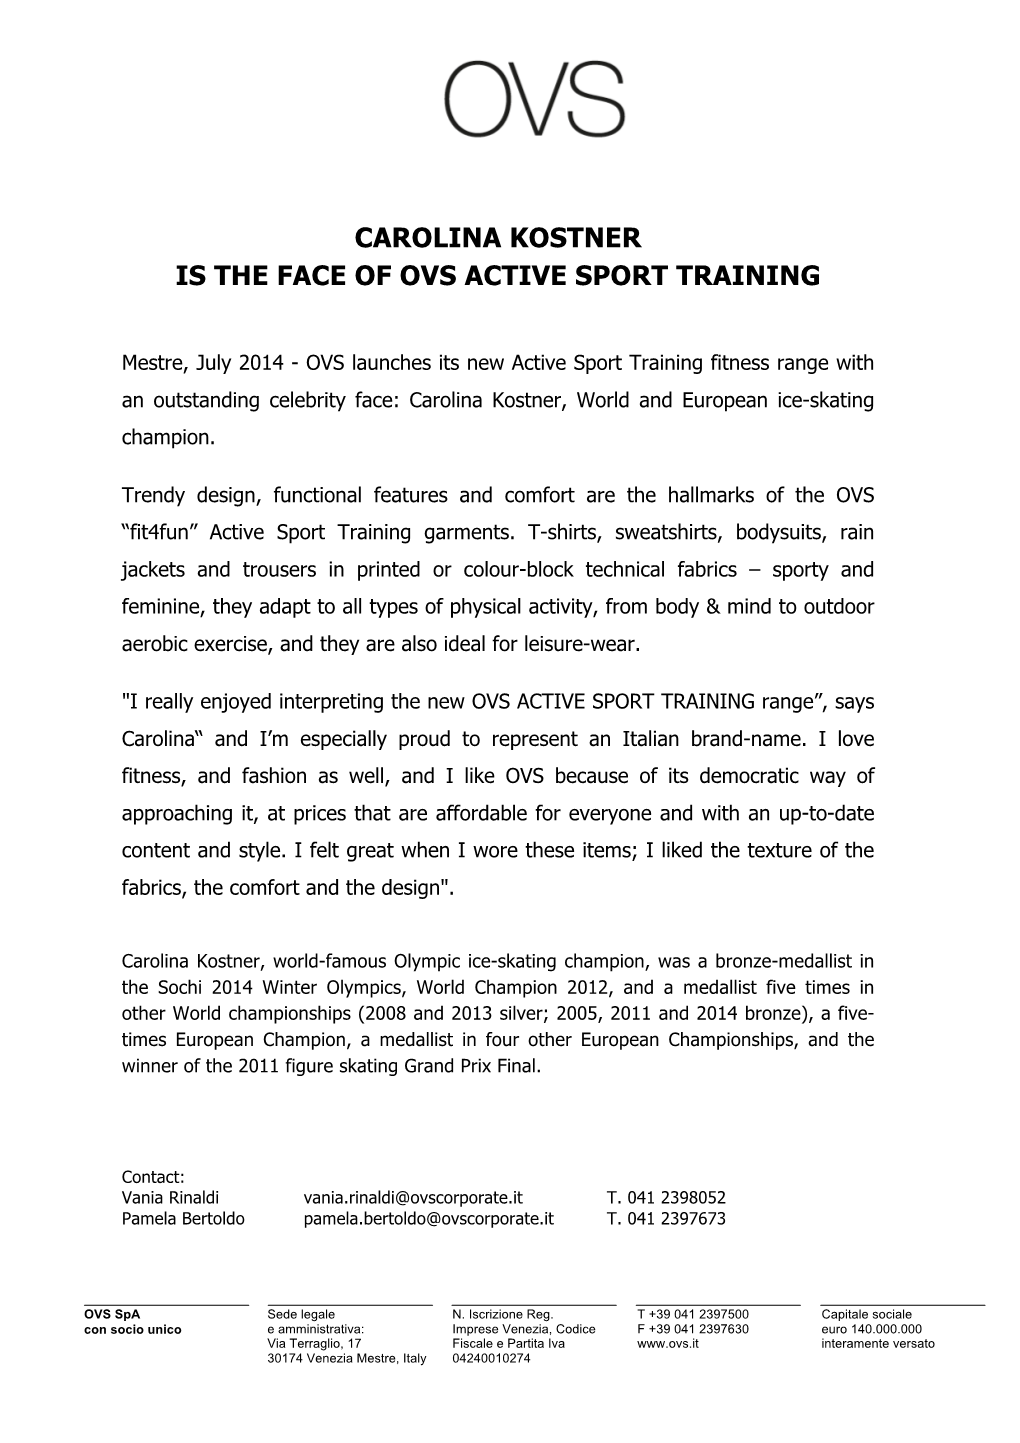 Carolina Kostner Is the Face of Ovs Active Sport Training